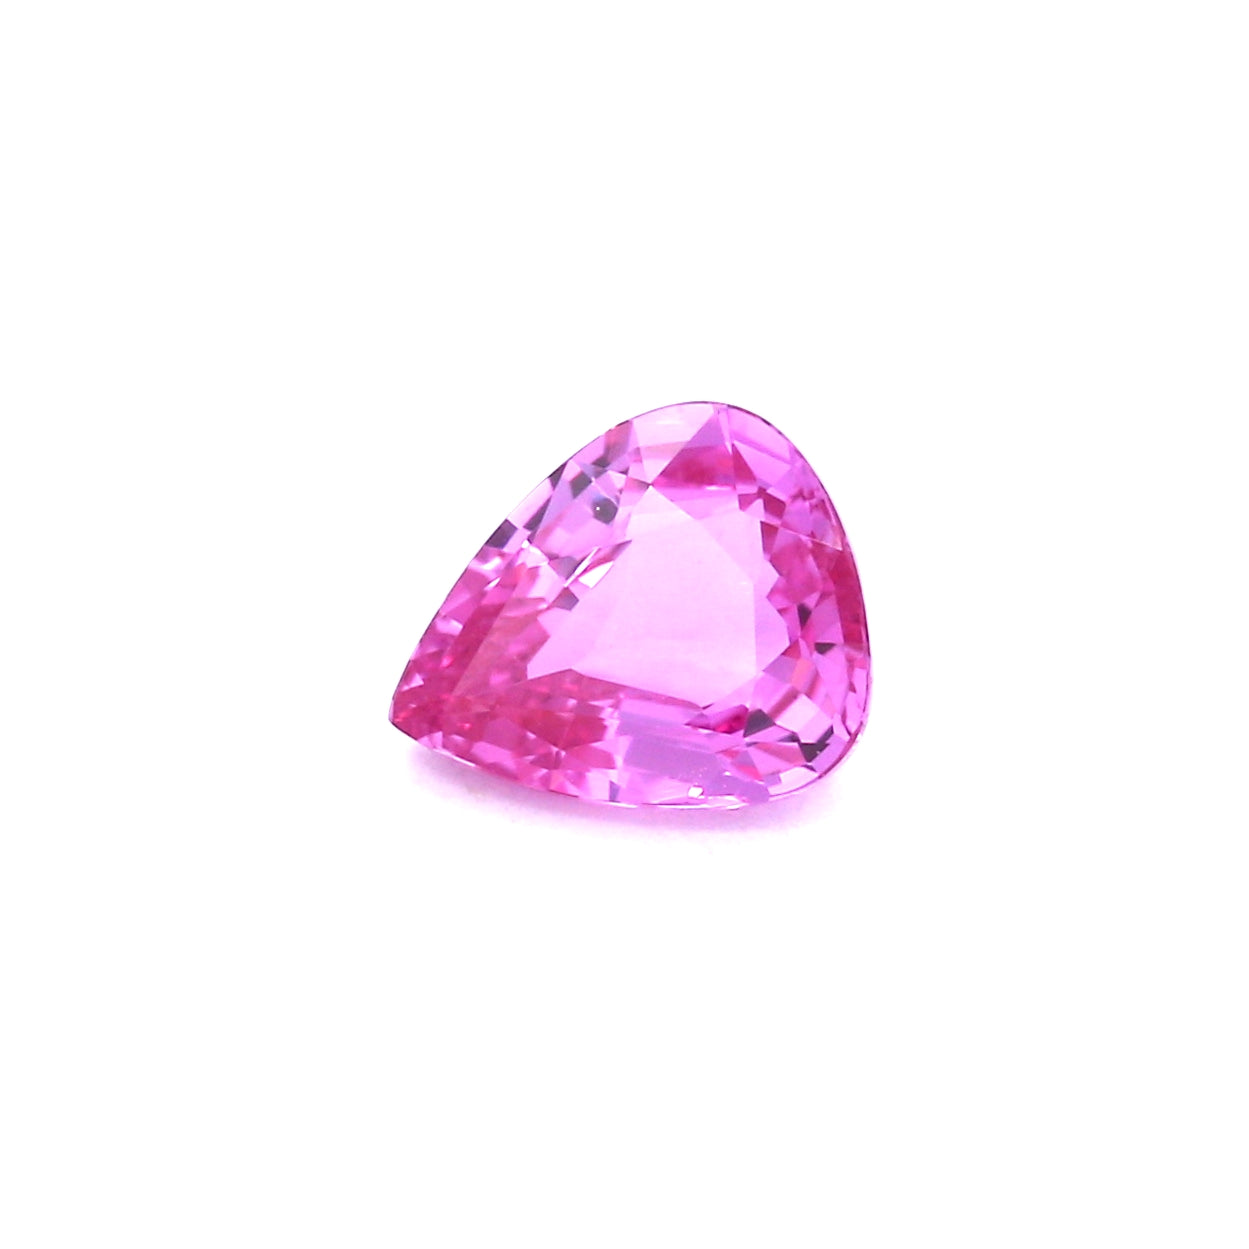 1.89ct Purplish Pink, Pear Shape Sapphire, Heated, Madagascar - 8.65 x 7.16 x 3.63mm